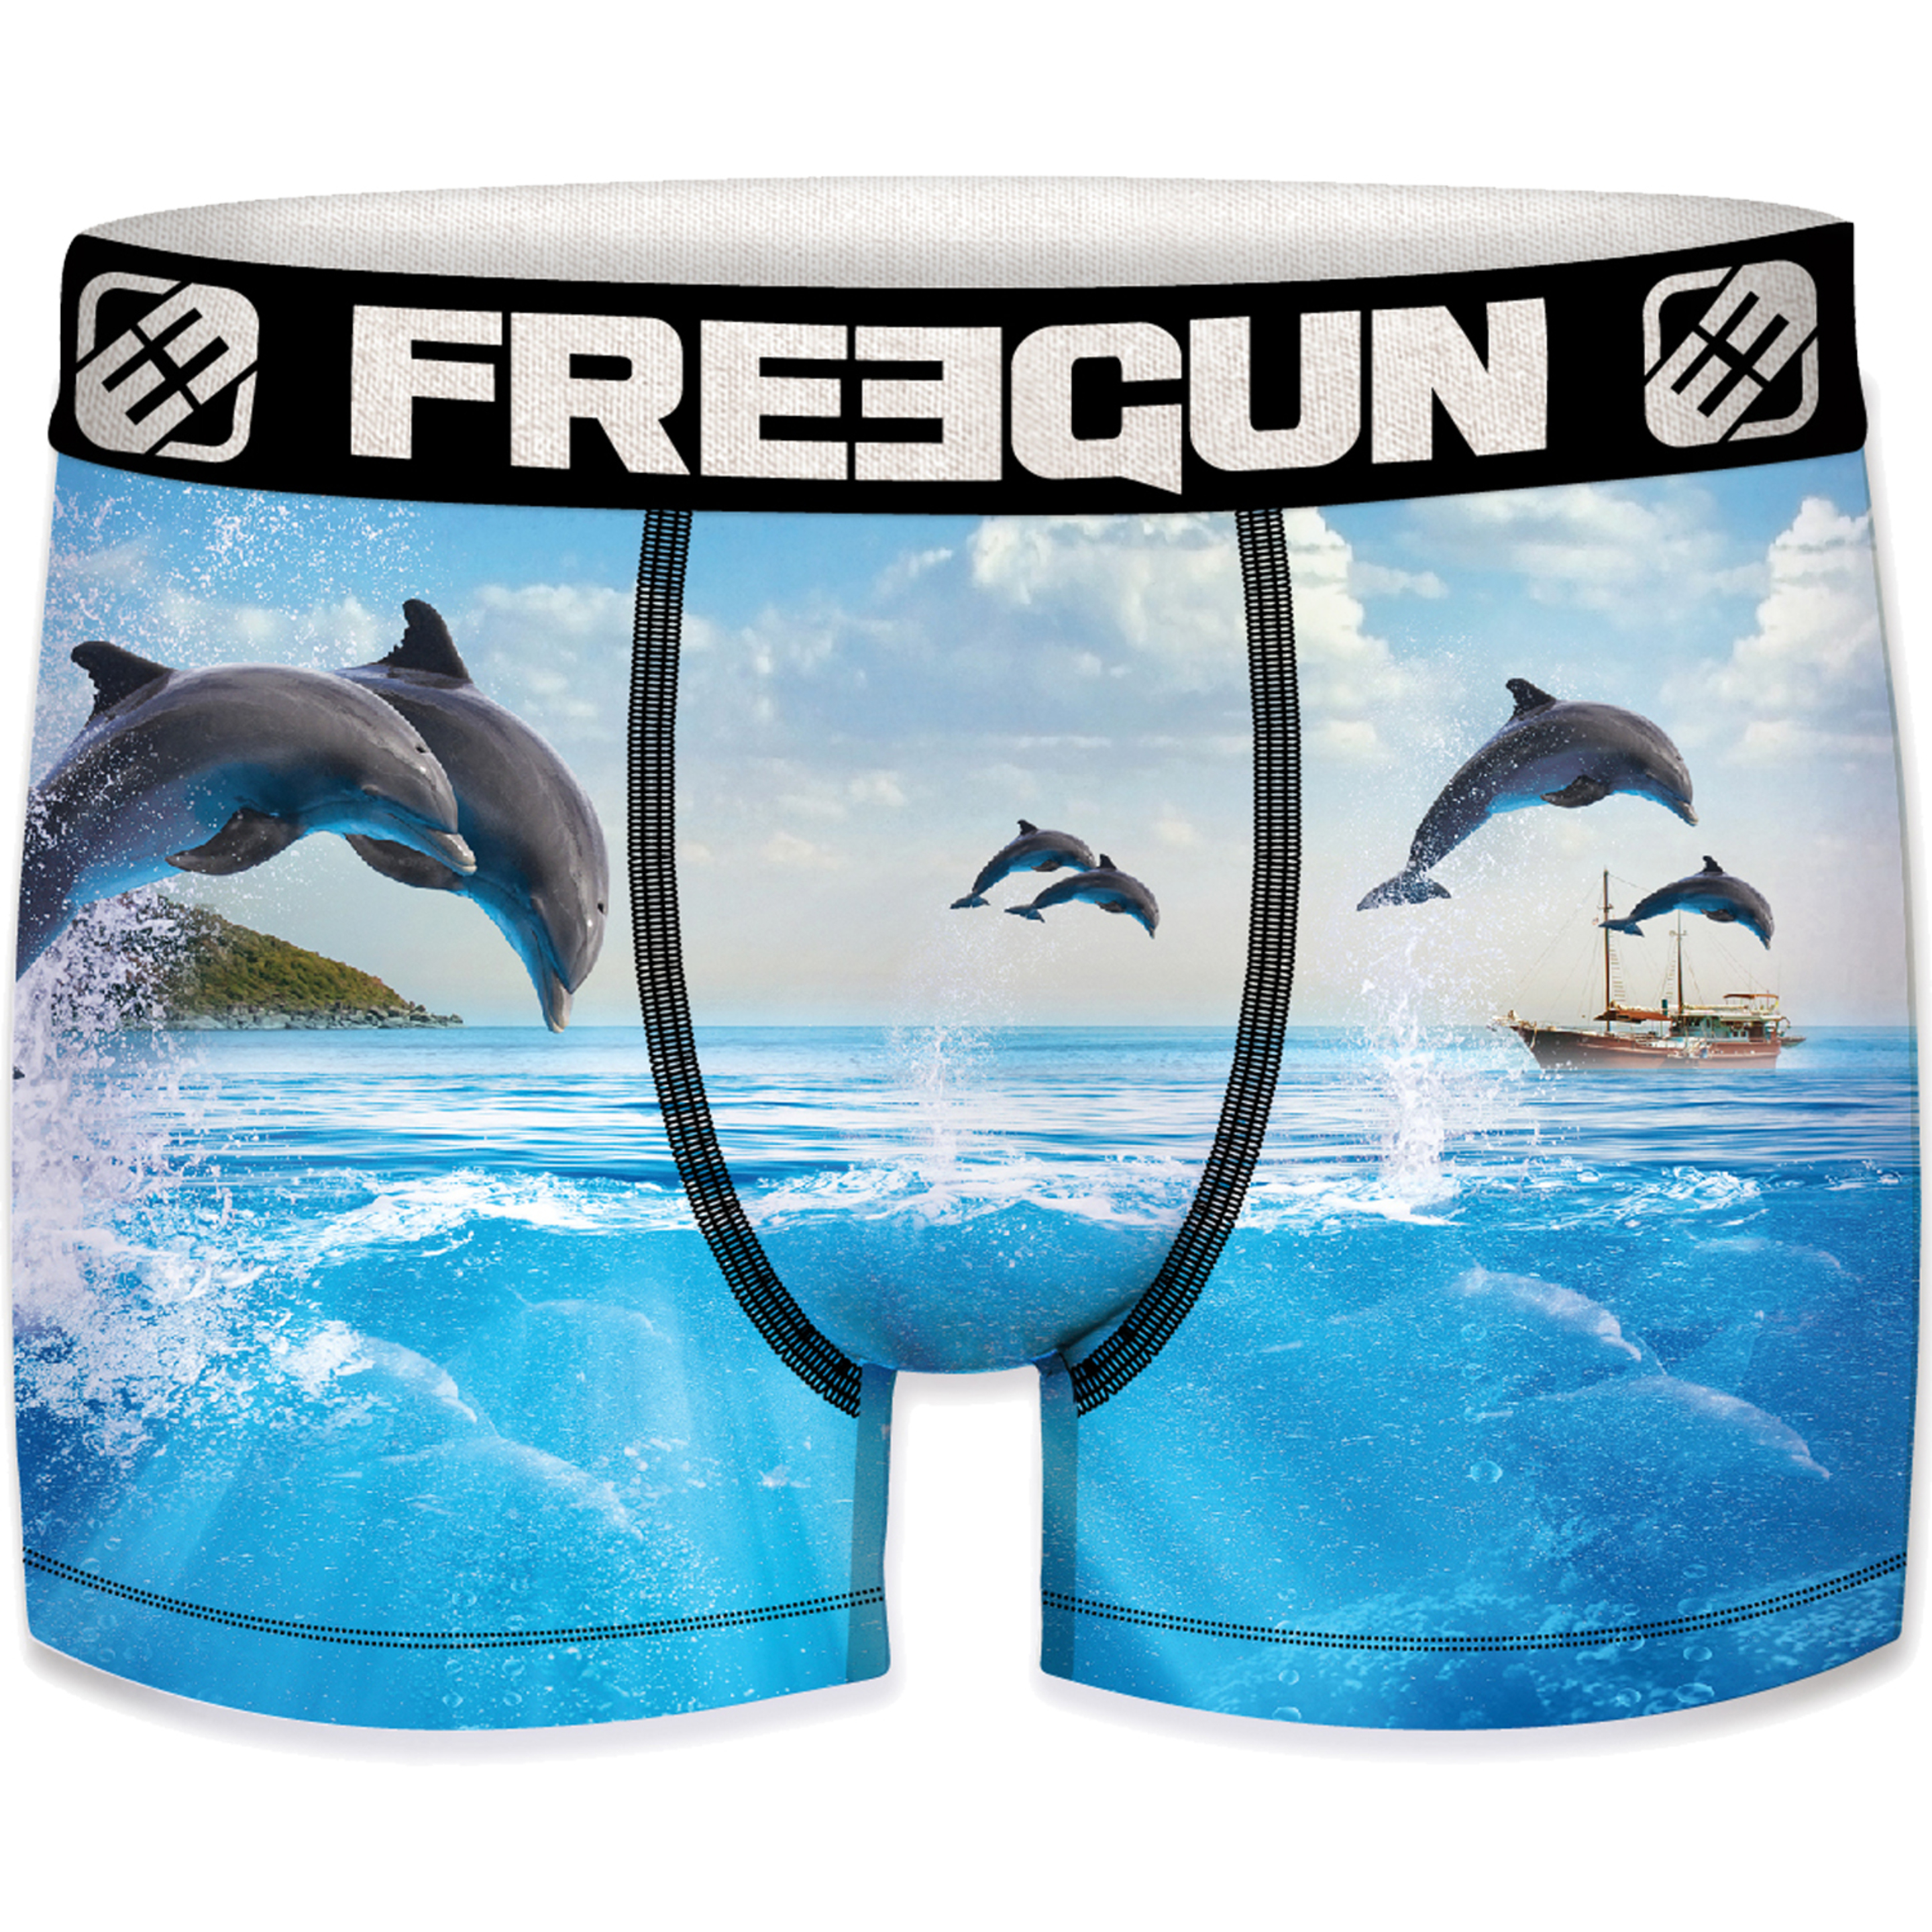 Calzoncillo Delfines Freegun - multicolor - 